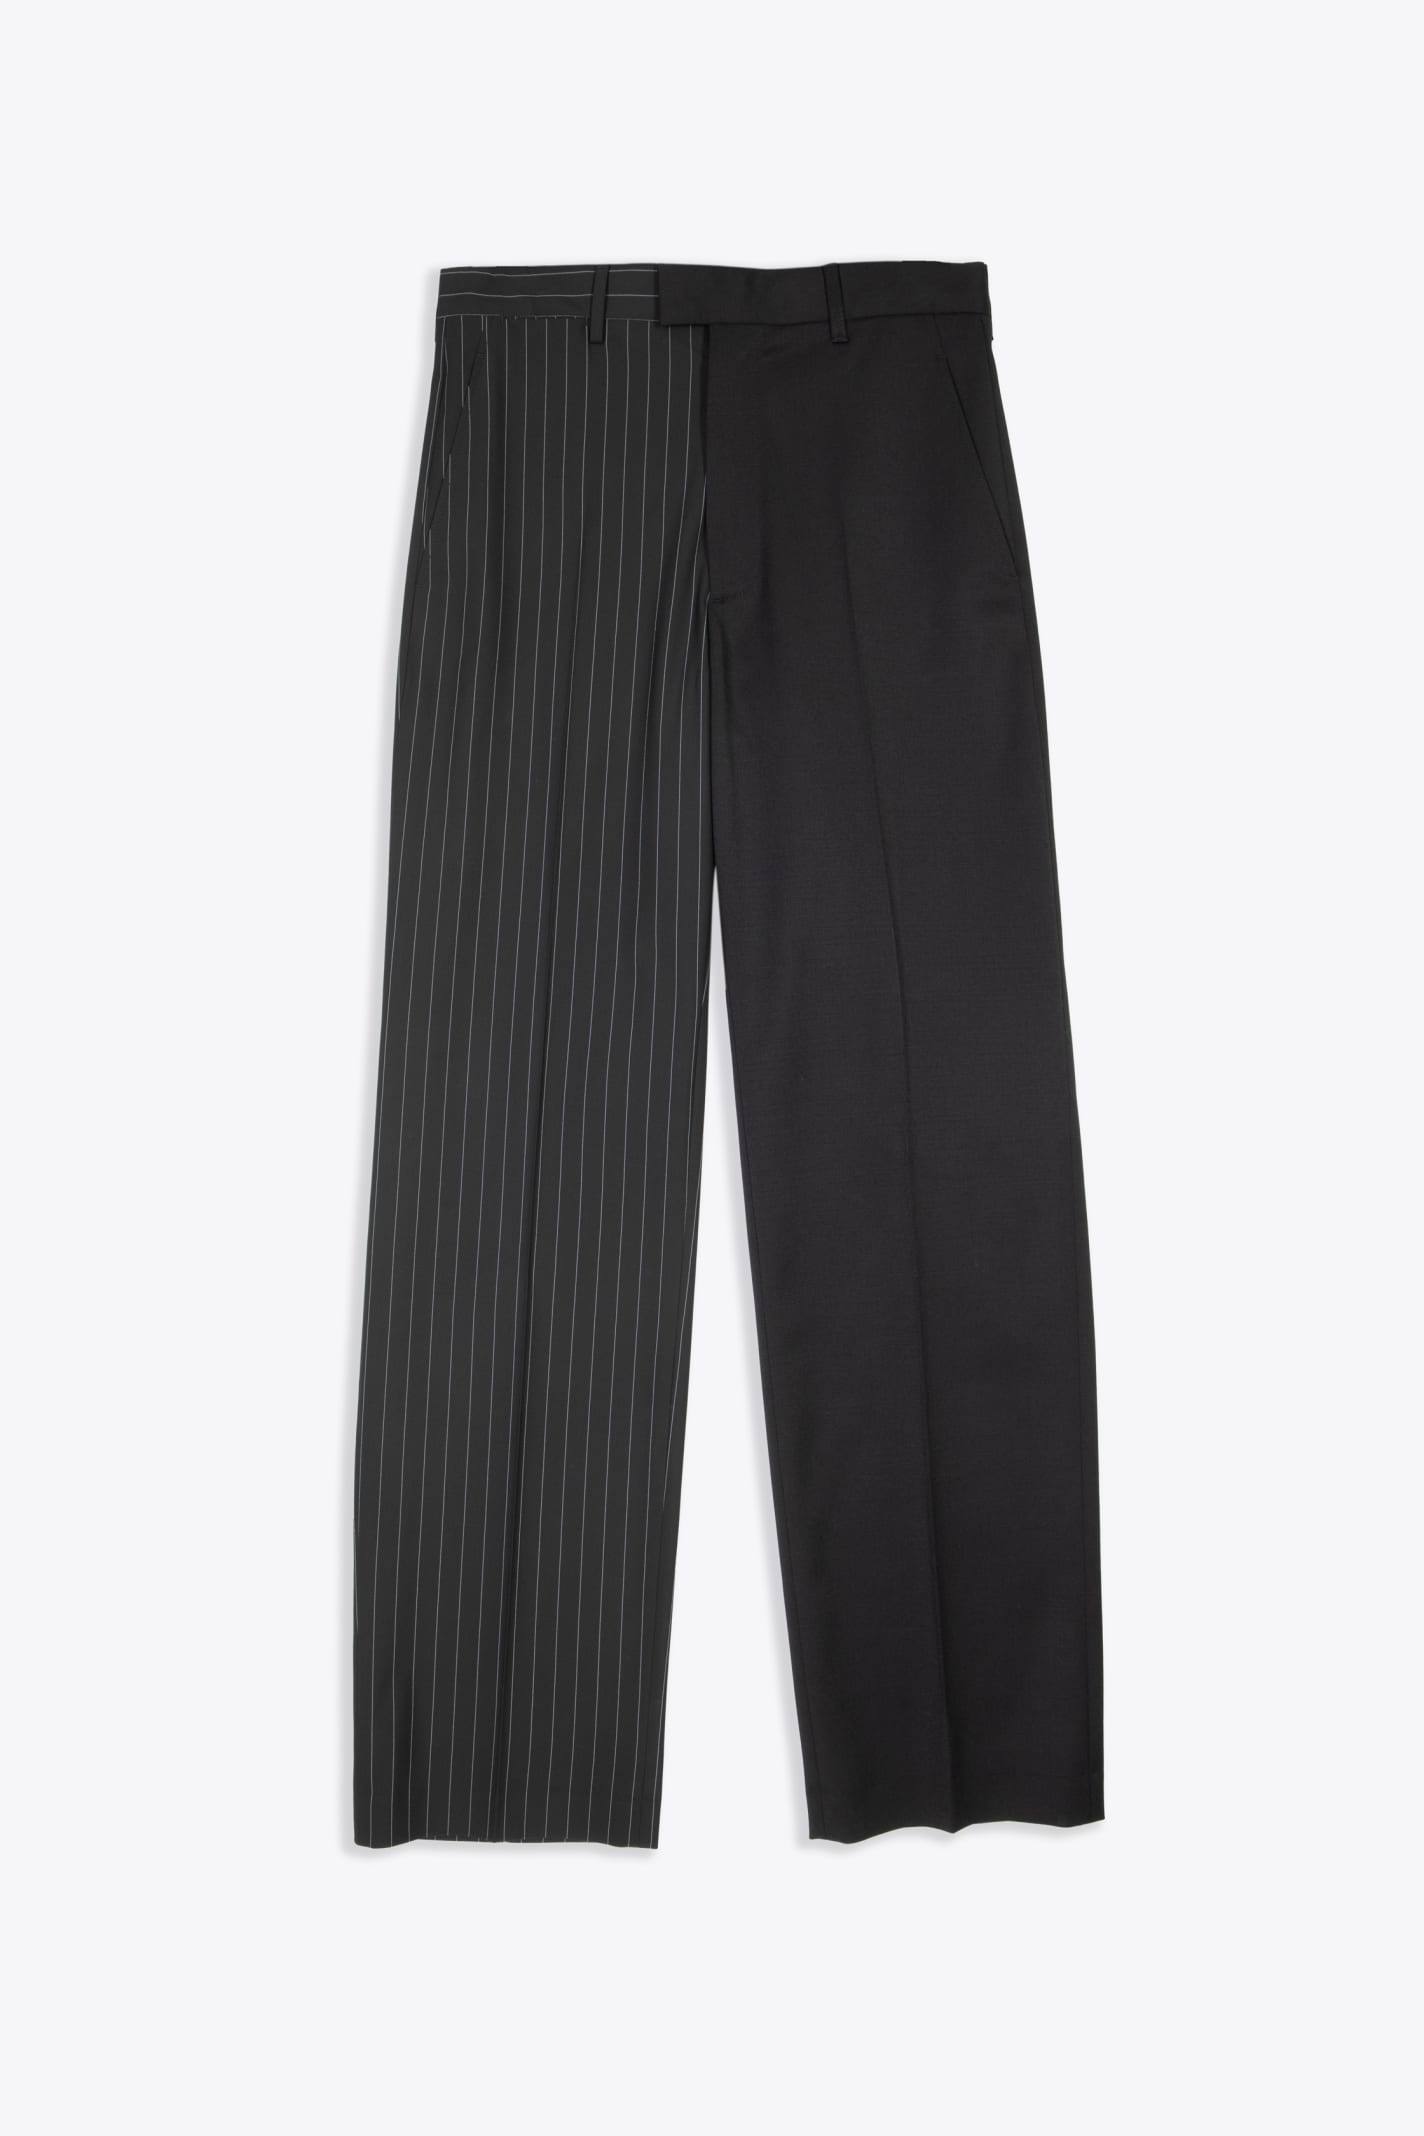 Pantalone Black Tailored Pant With Pinstriped Single Leg